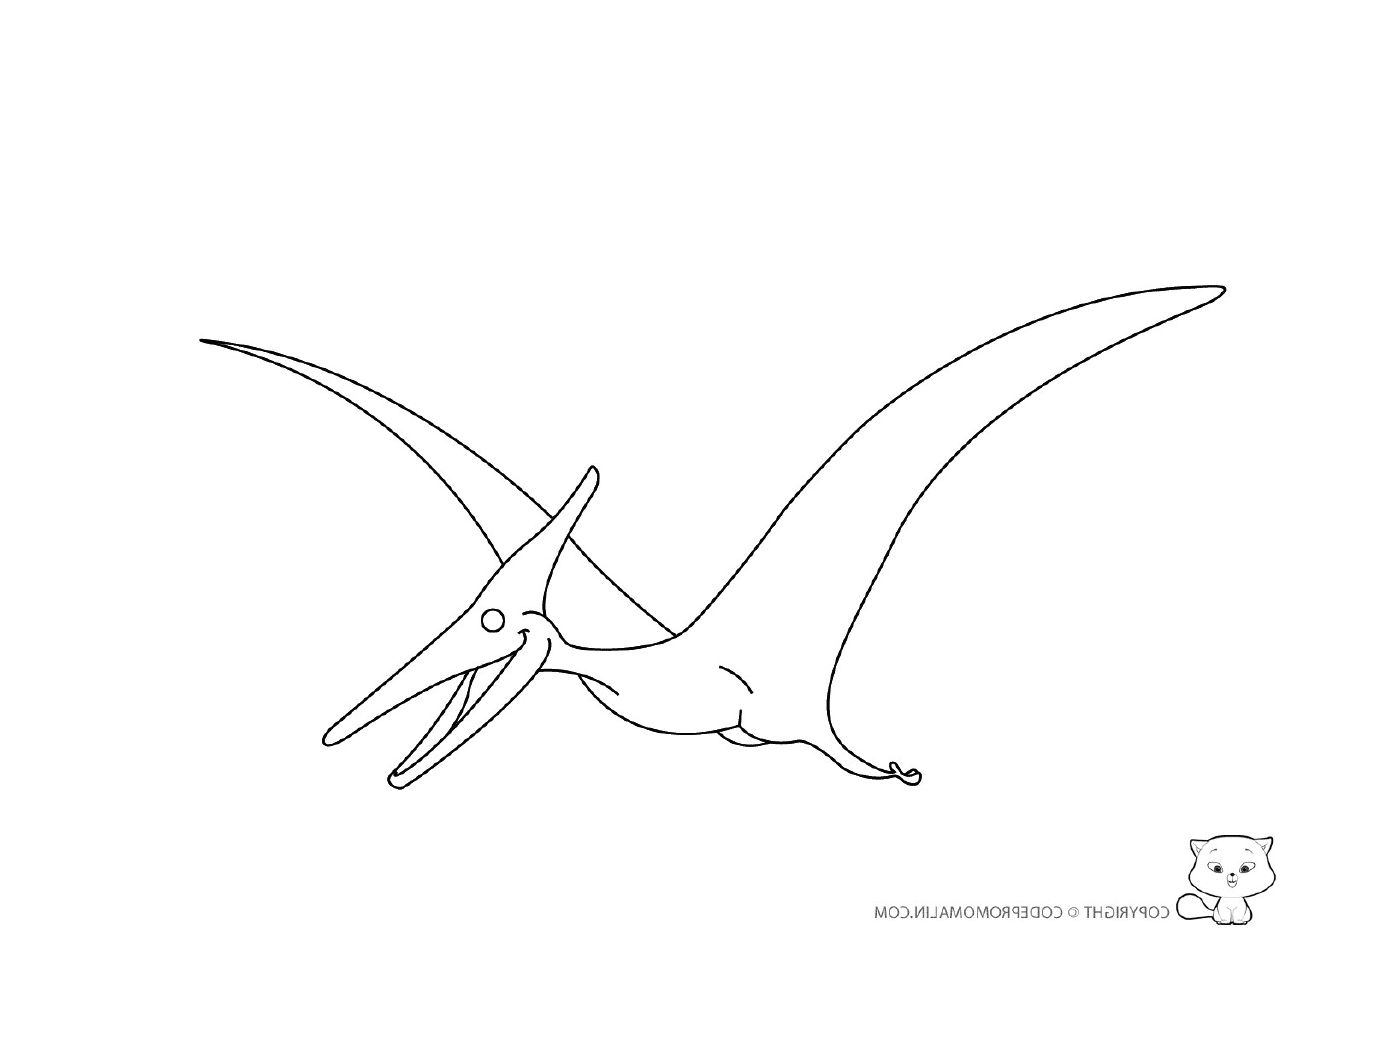   Pterodactylus en plein vol 